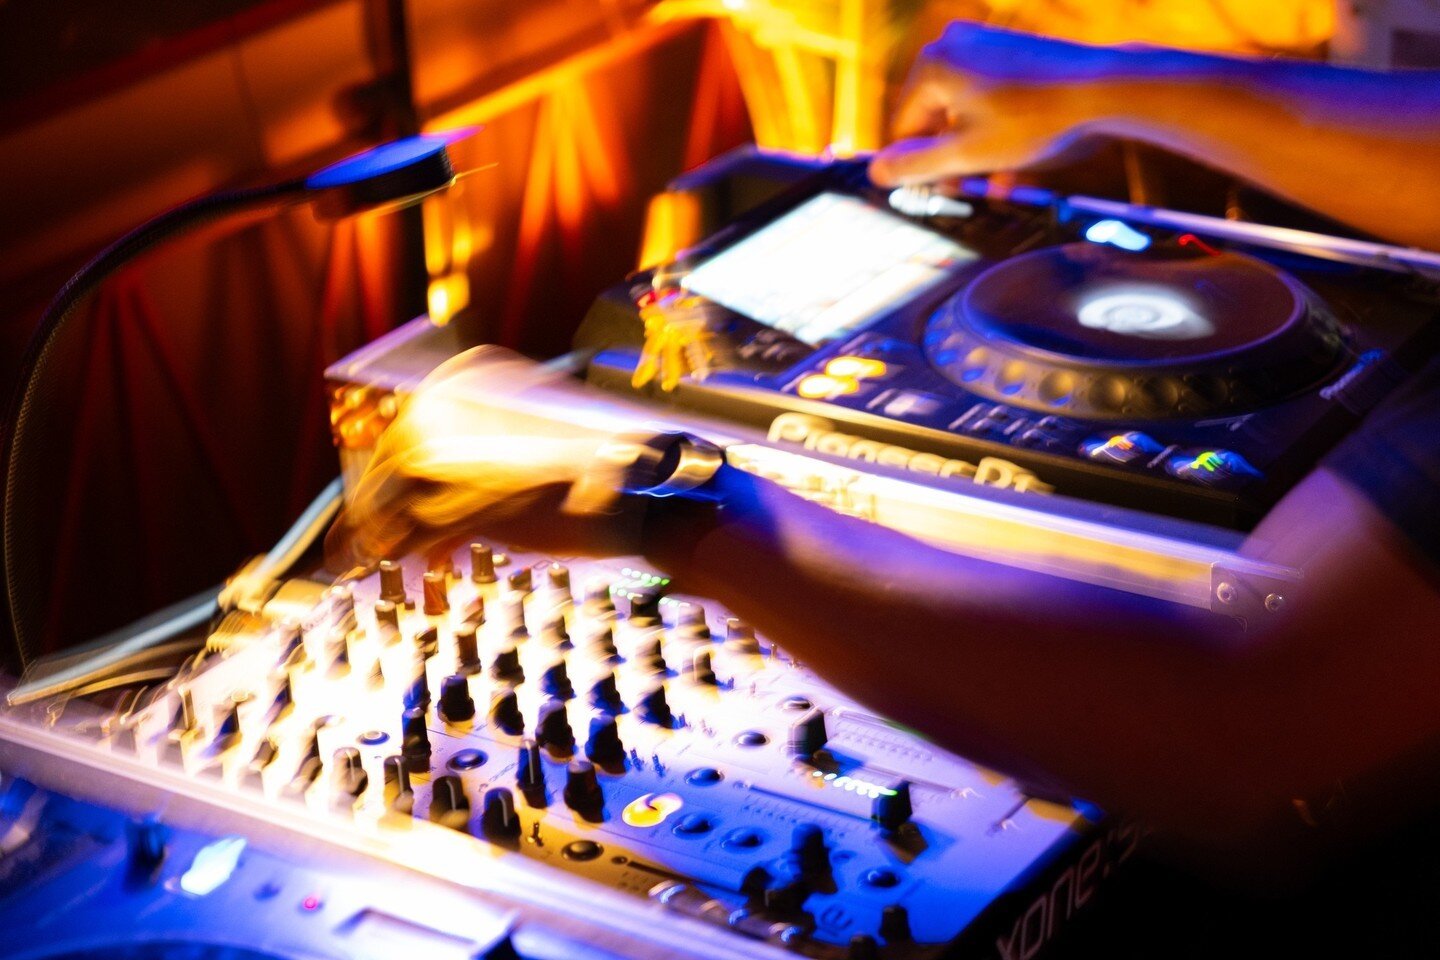 DJ sets strike every week starting on Tuesday with weekly resident @DiasFunkOfficial starting at 8 PM. 👌 ⁠
⁠
_⁠
#arbellachicago #rivernorthchicago #chicagohouse #chicagococktails #madeinchicago #chicago #vinyl #vinylset #djliveset #livedjset #djsetl